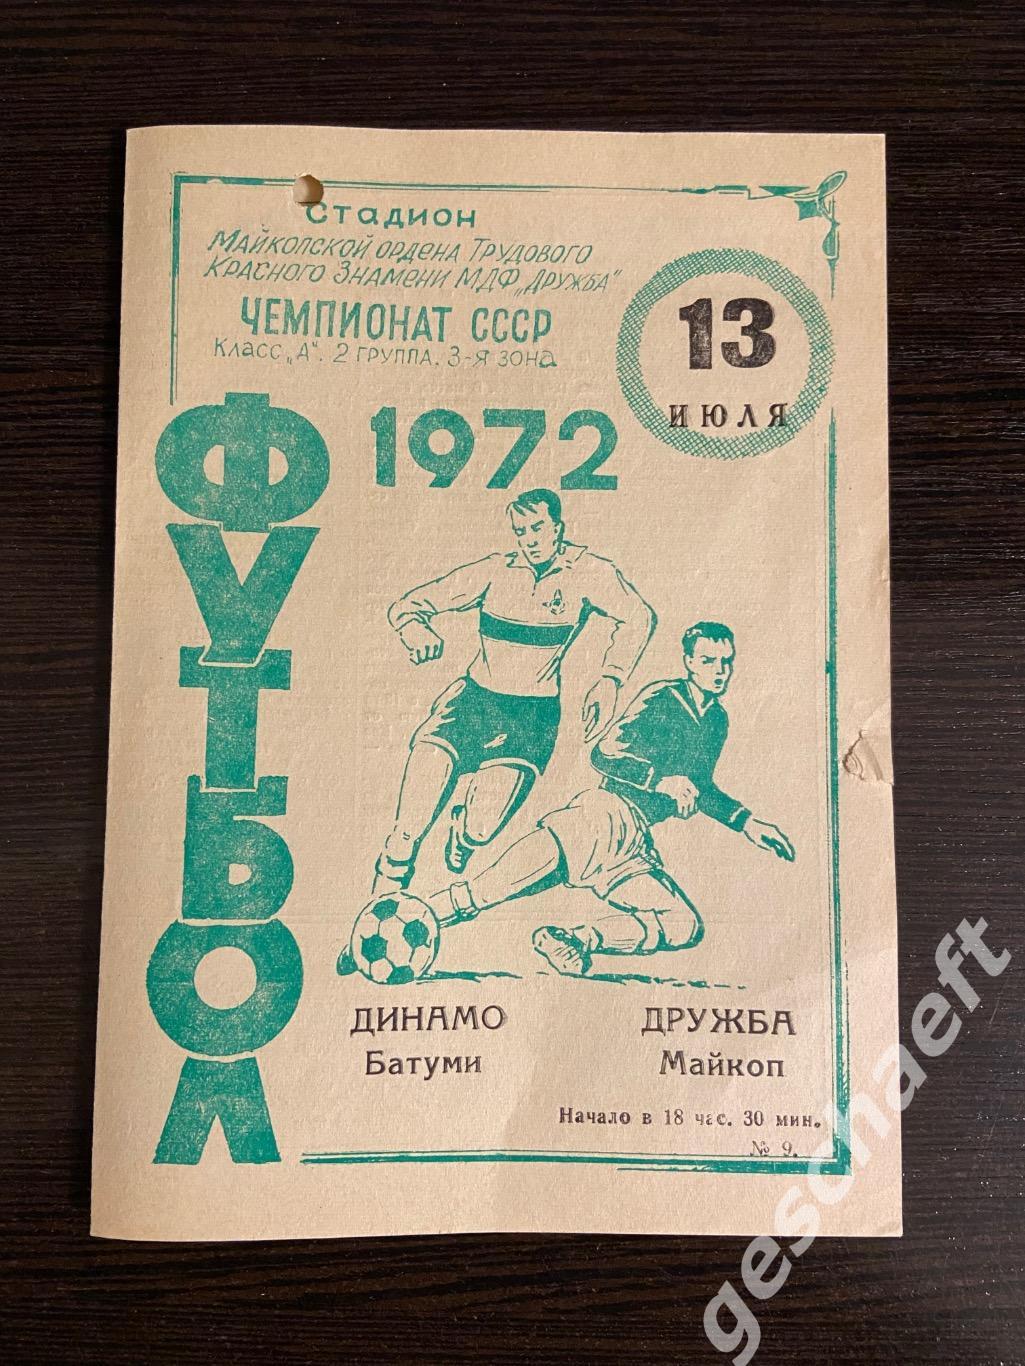 Дружба Майкоп - Динамо Батуми 13.07.1972